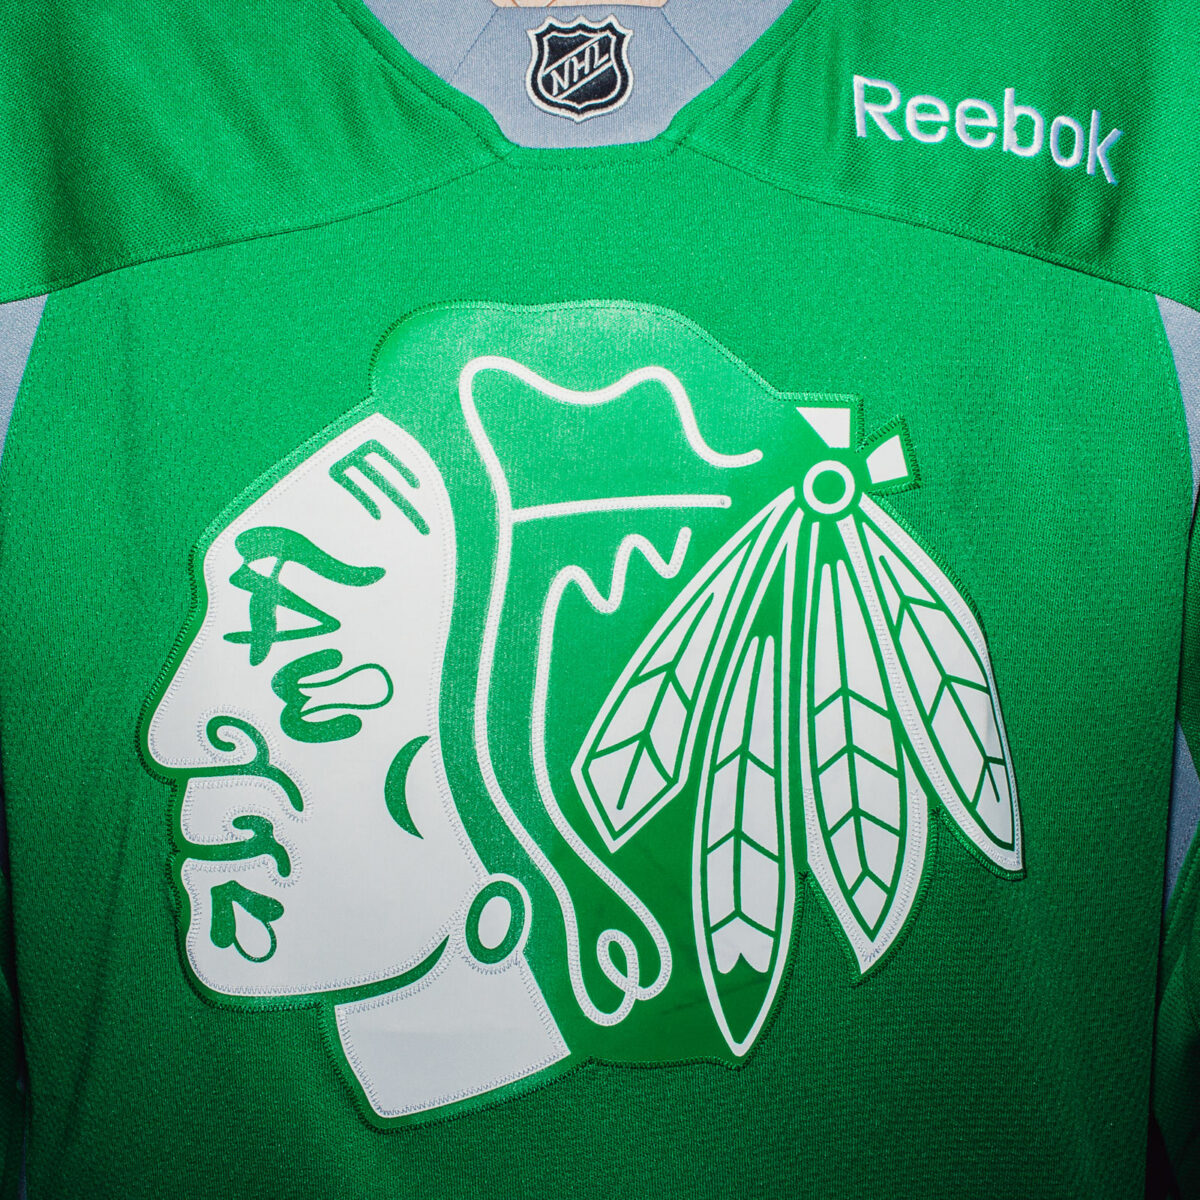 NHL Reebok Chicago Blackhawks Jersey green sale